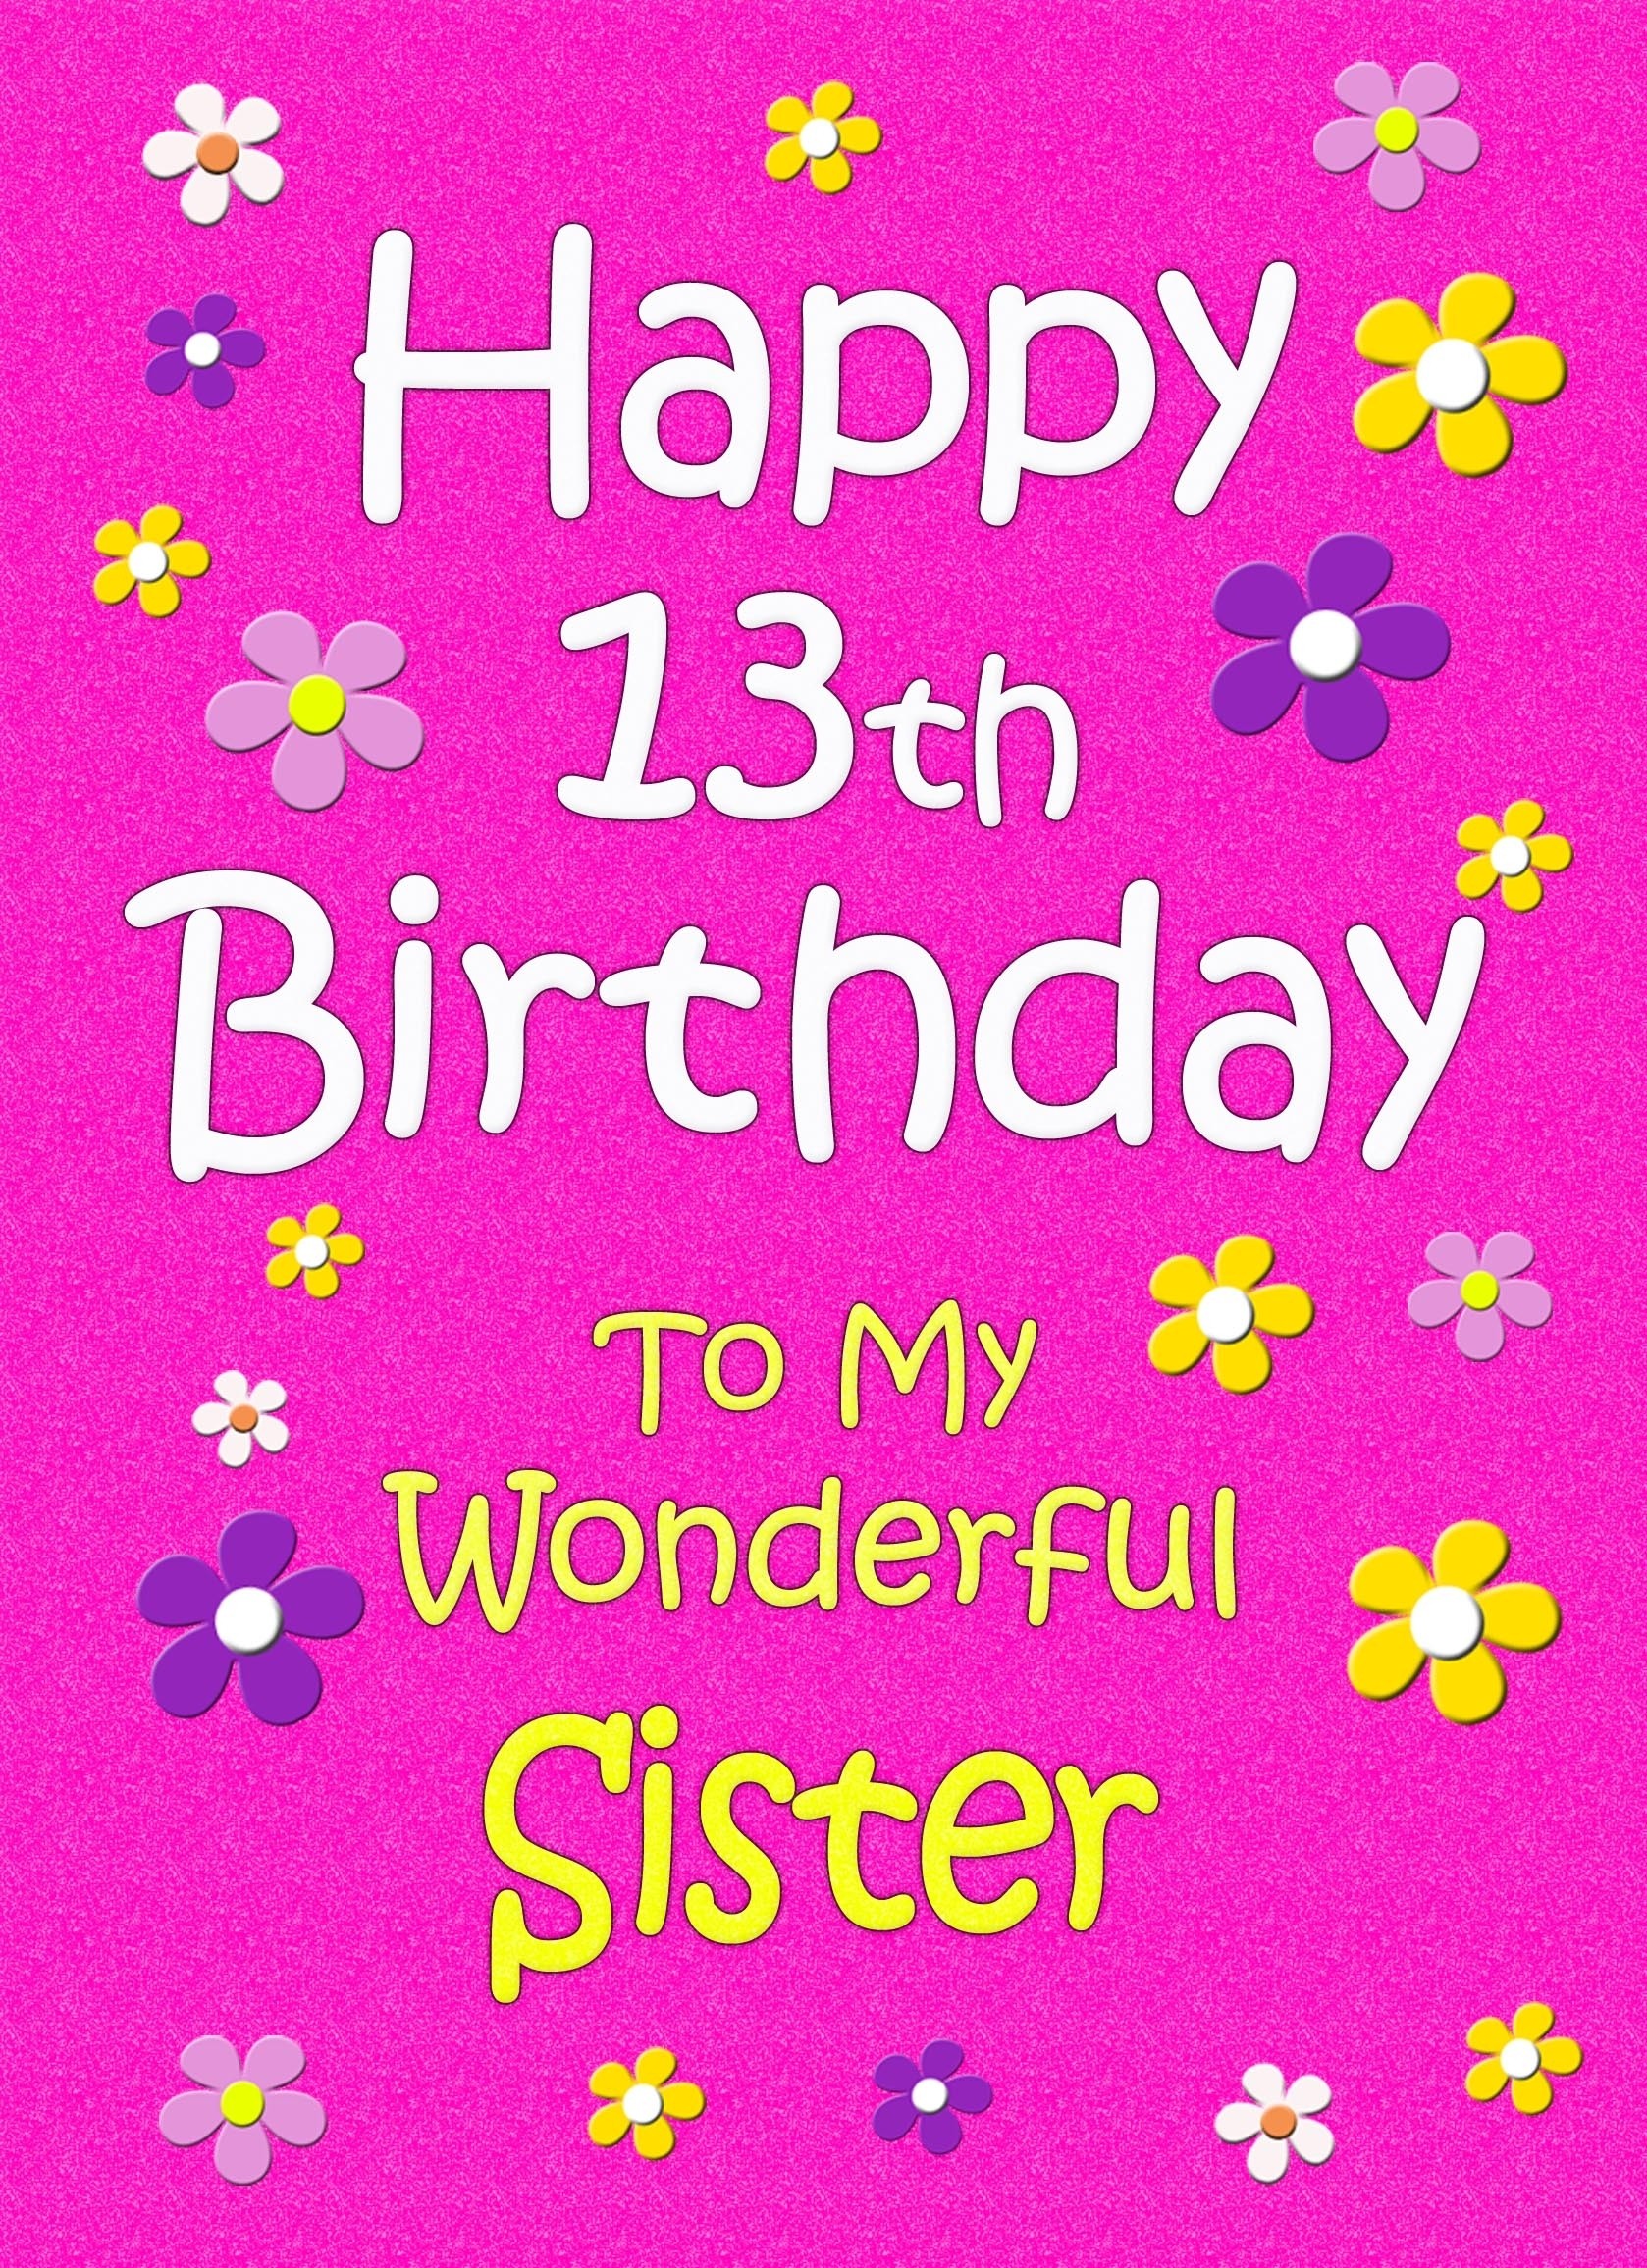 Sister 13th Birthday Card (Pink)